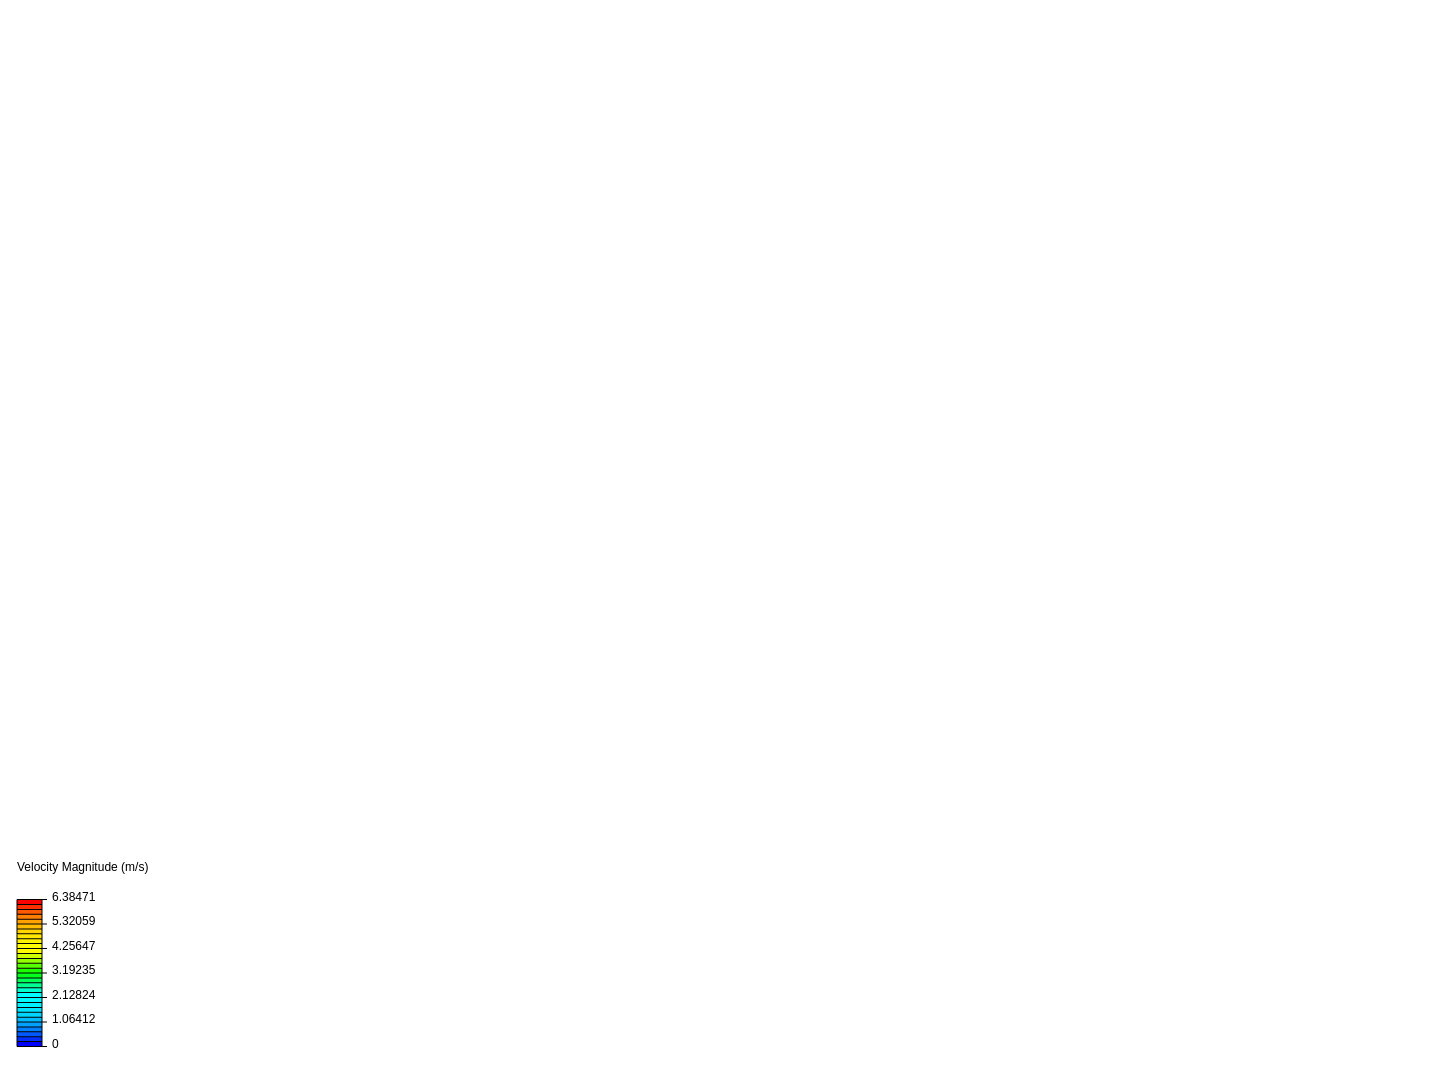 K-epsilon: Kanava, symmetric image